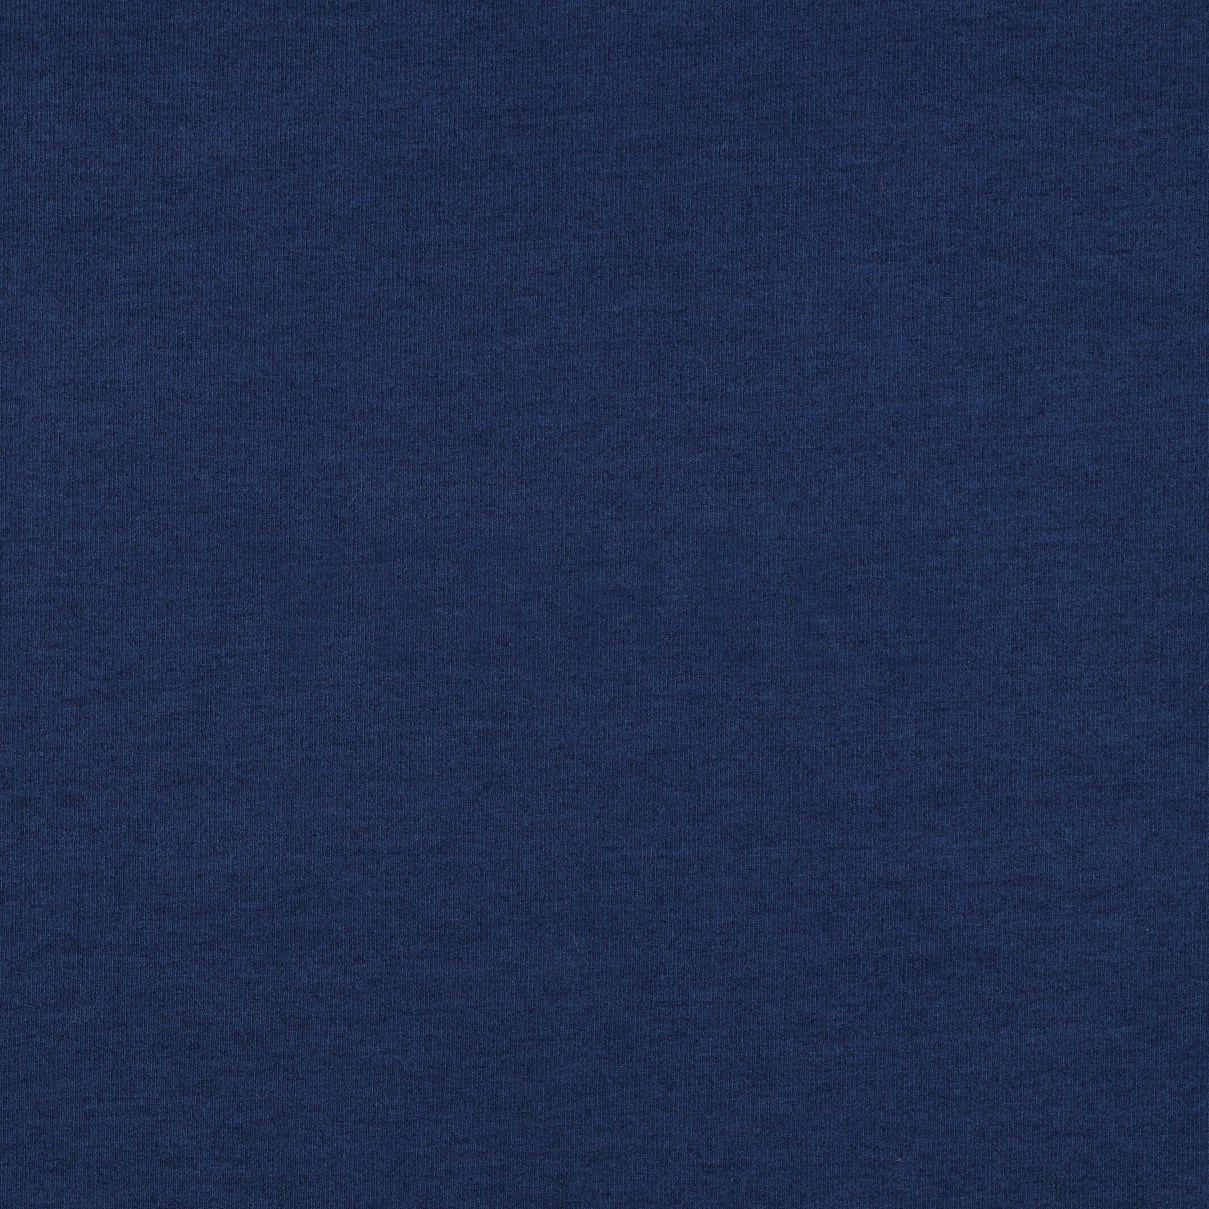 BRUSHED RIB JERSEY DARK BLUE (high resolution)